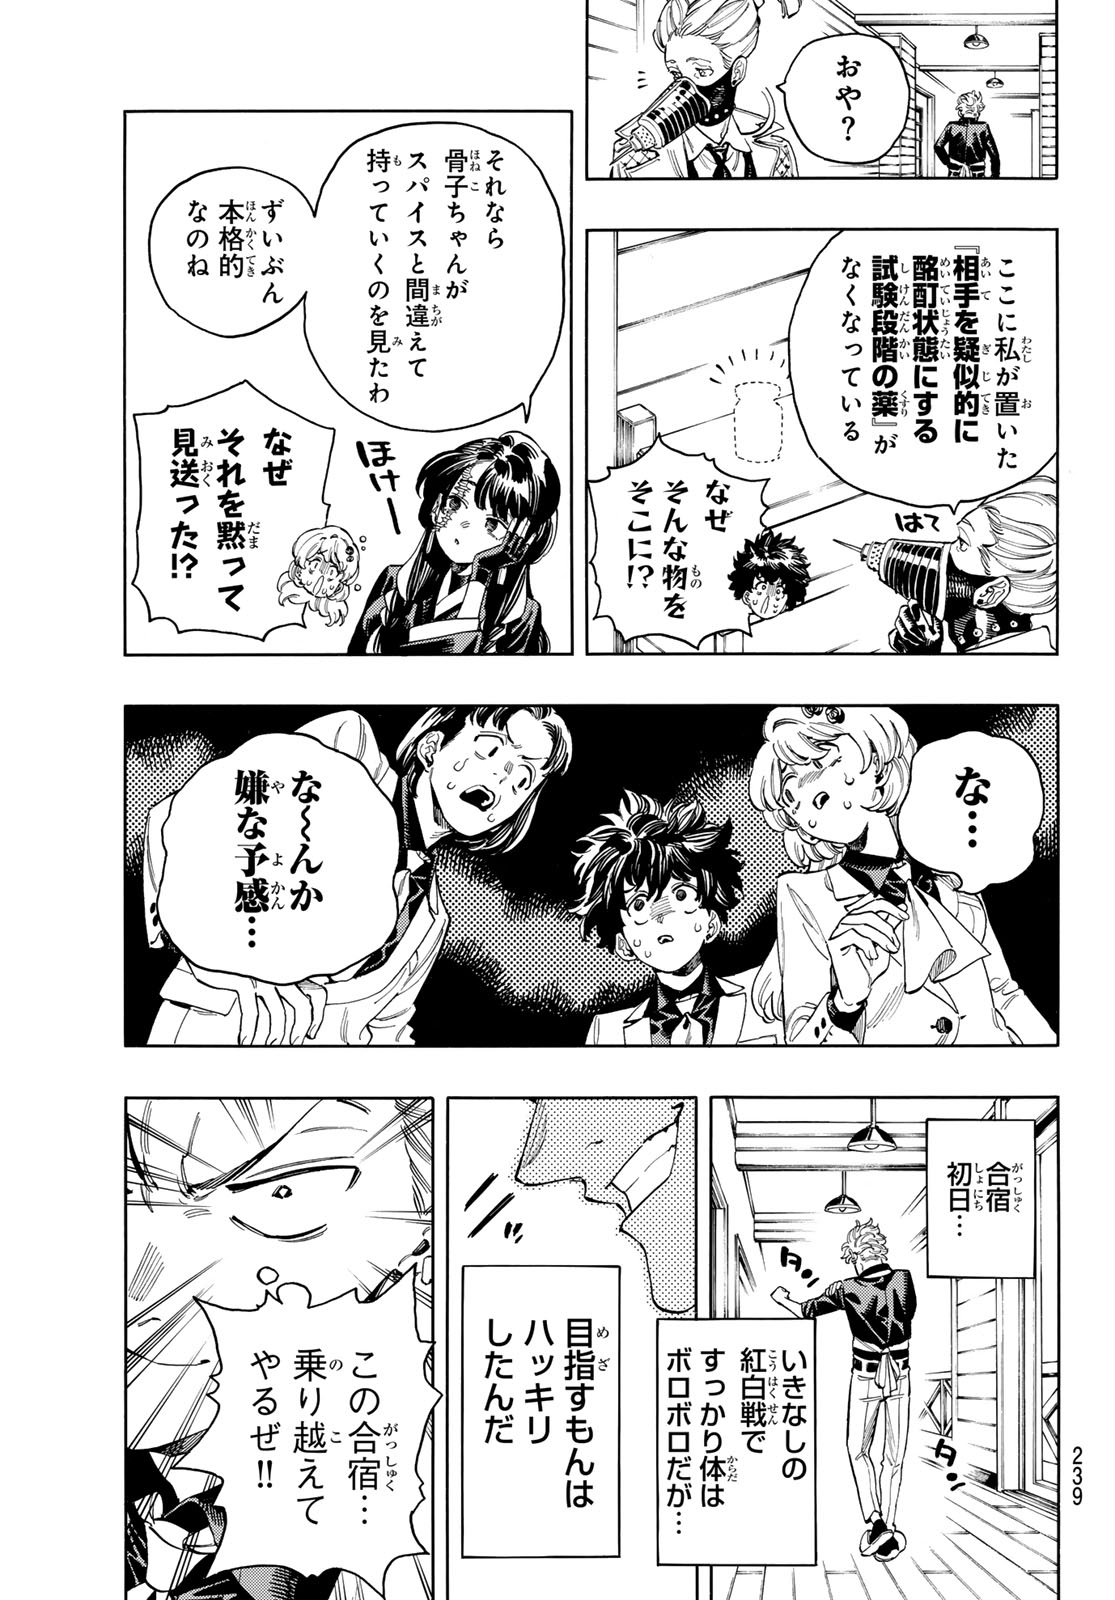 Akabane Honeko no Bodyguard - Chapter 86 - Page 19